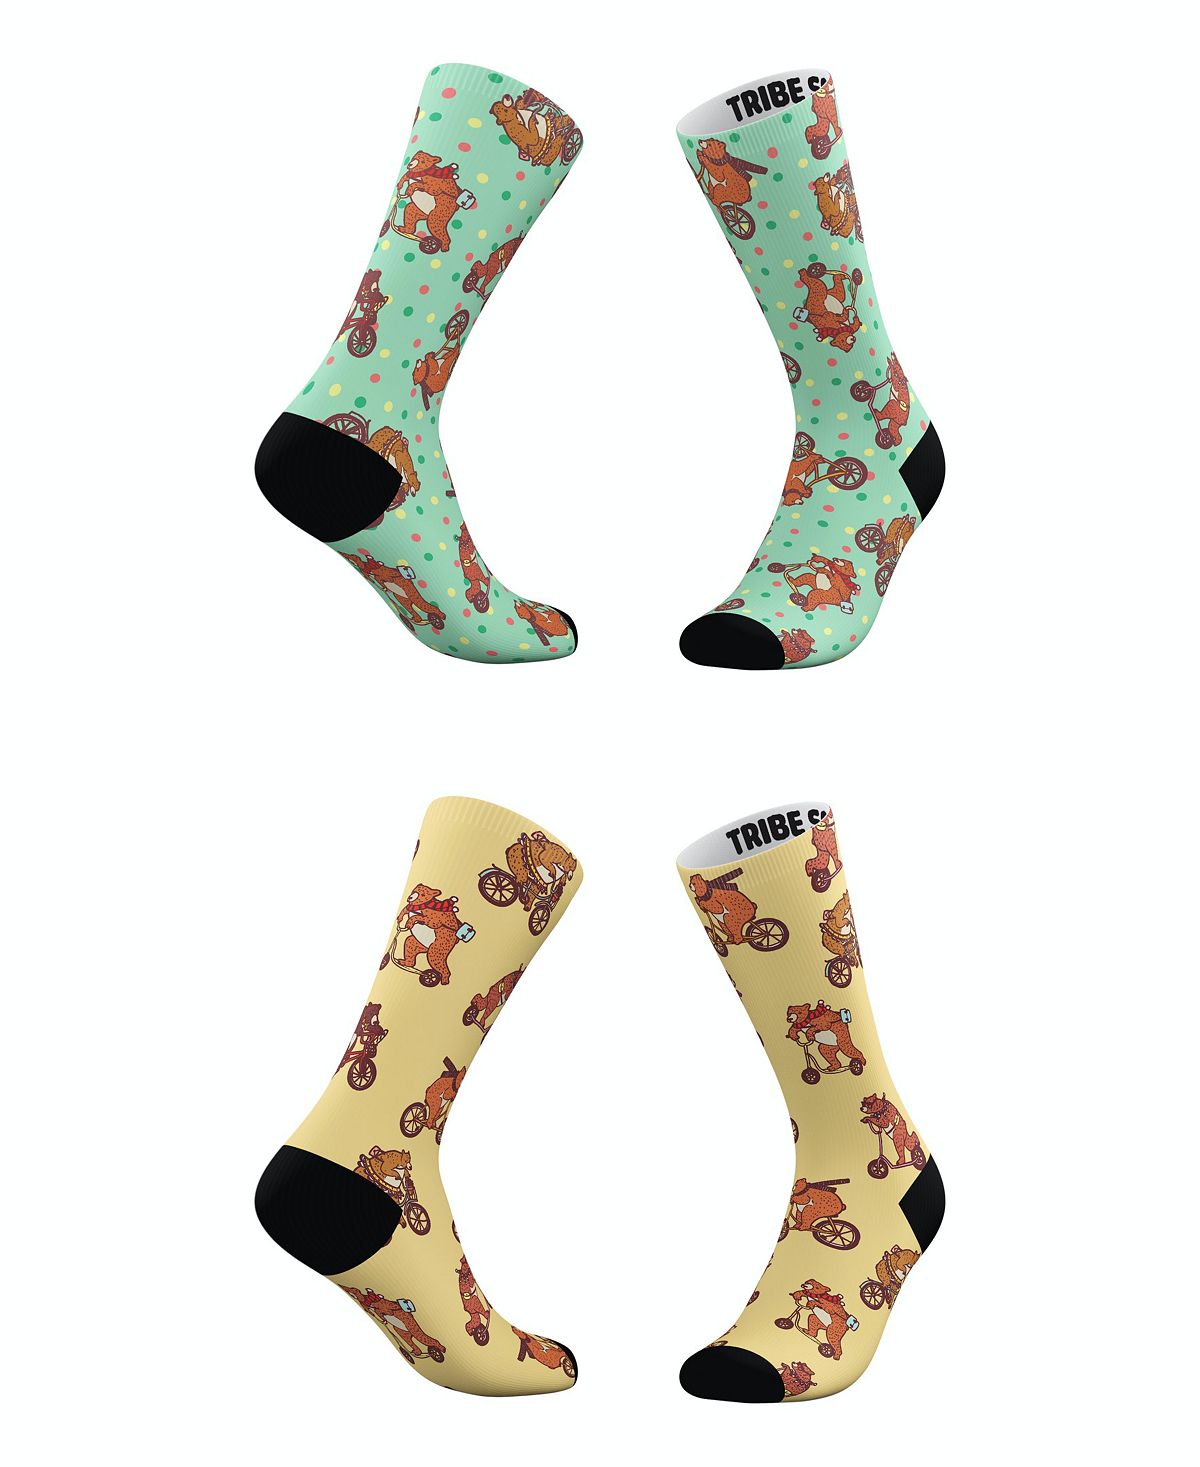 Мужские и женские носки Hipster Bears, набор из 2 штук Tribe Socks pre